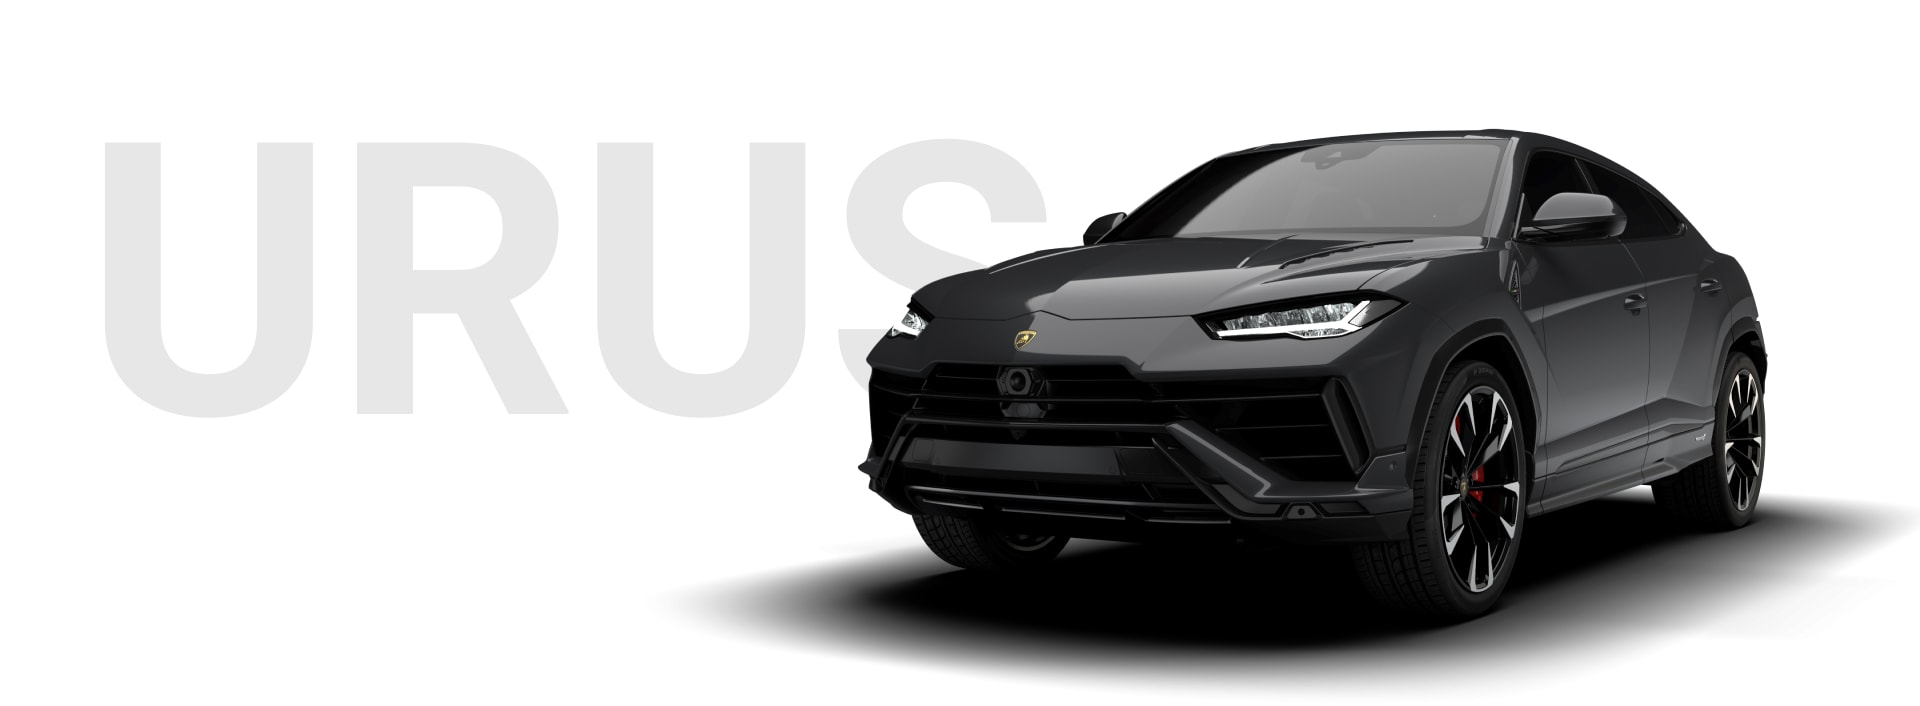 Automobili Lamborghini - Official Website 